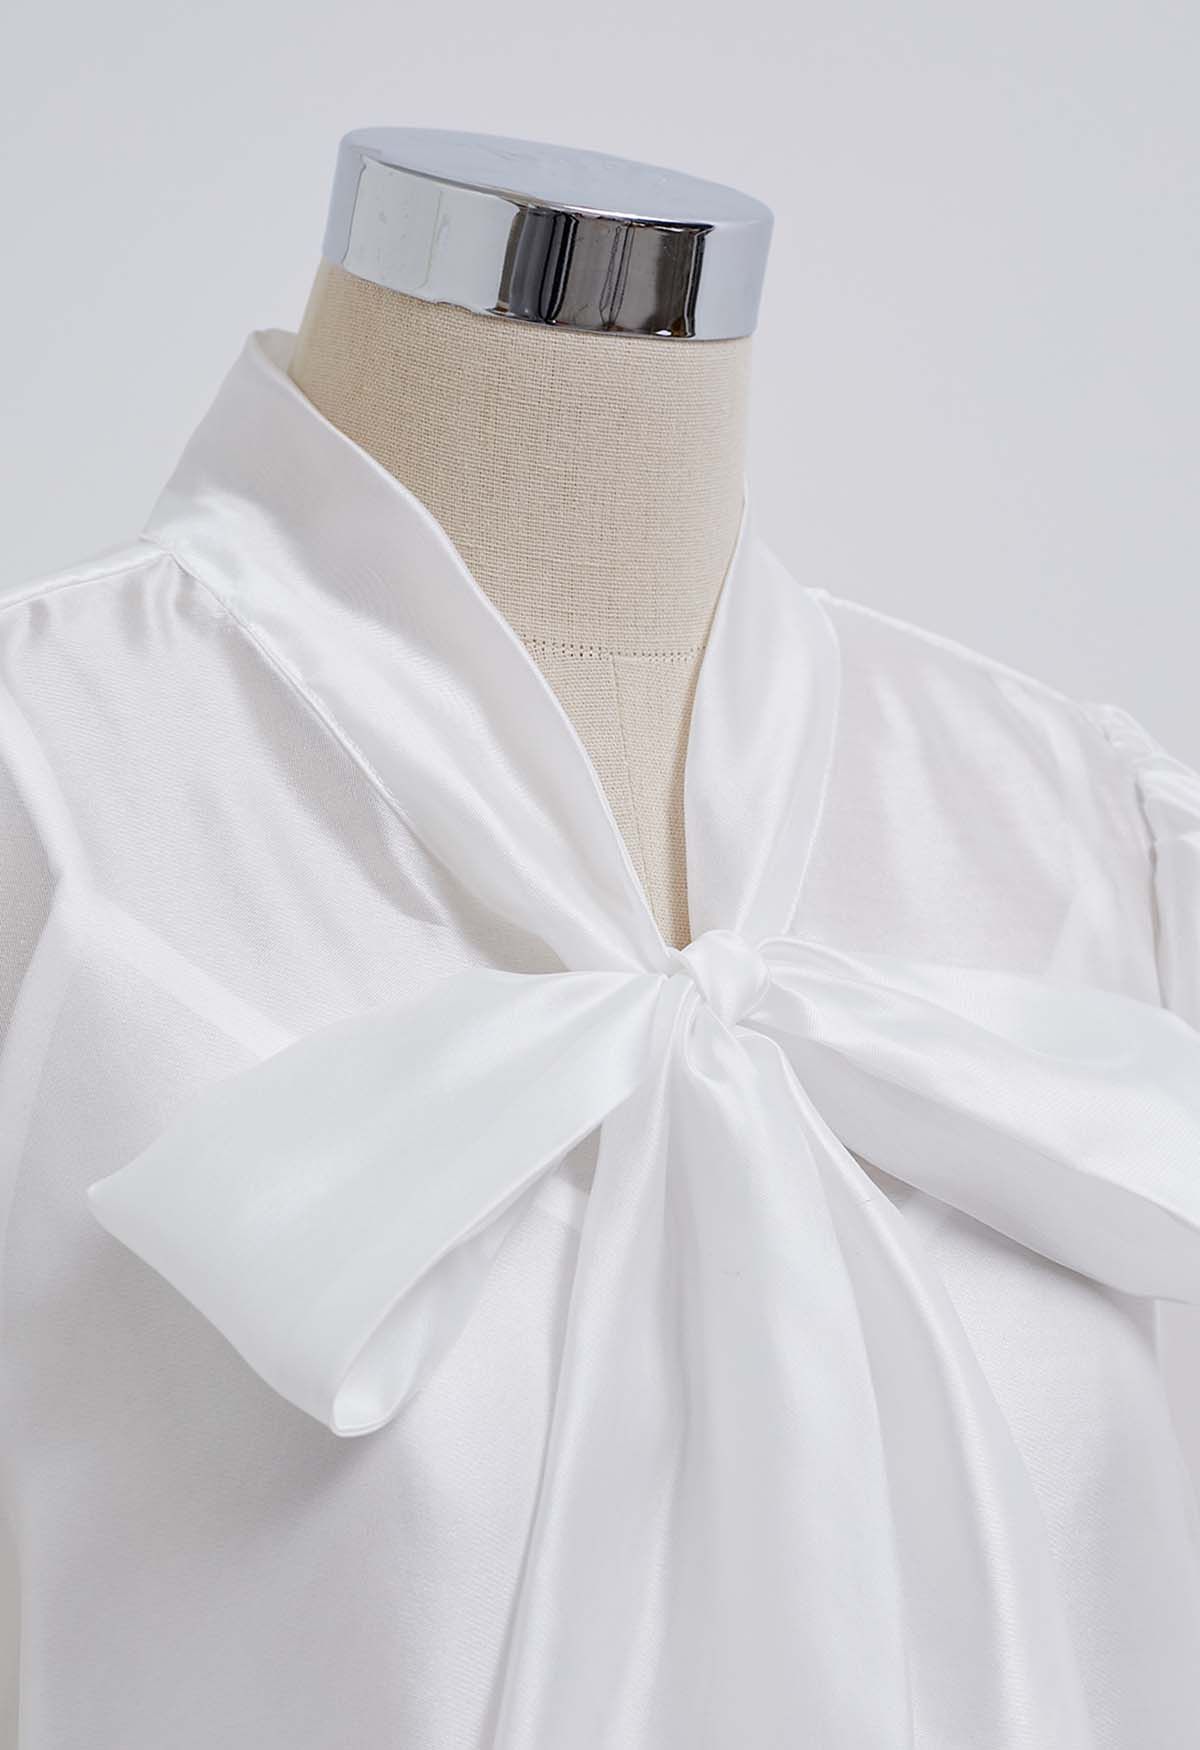 Elegant Bowknot Puff Sleeves Sheer Shirt in White